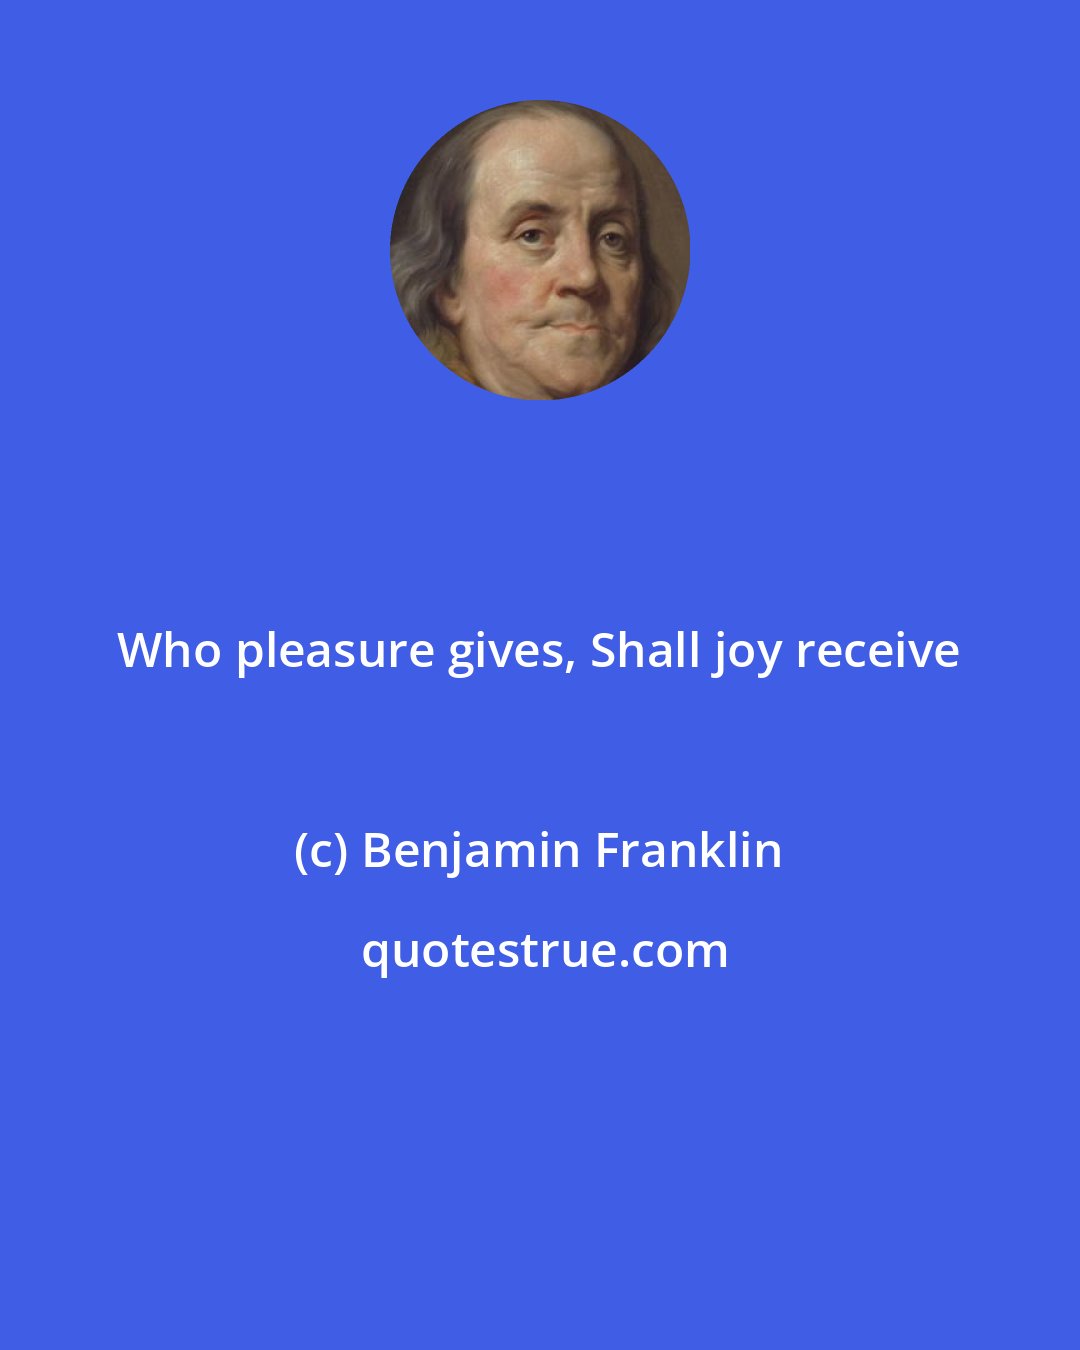 Benjamin Franklin: Who pleasure gives, Shall joy receive